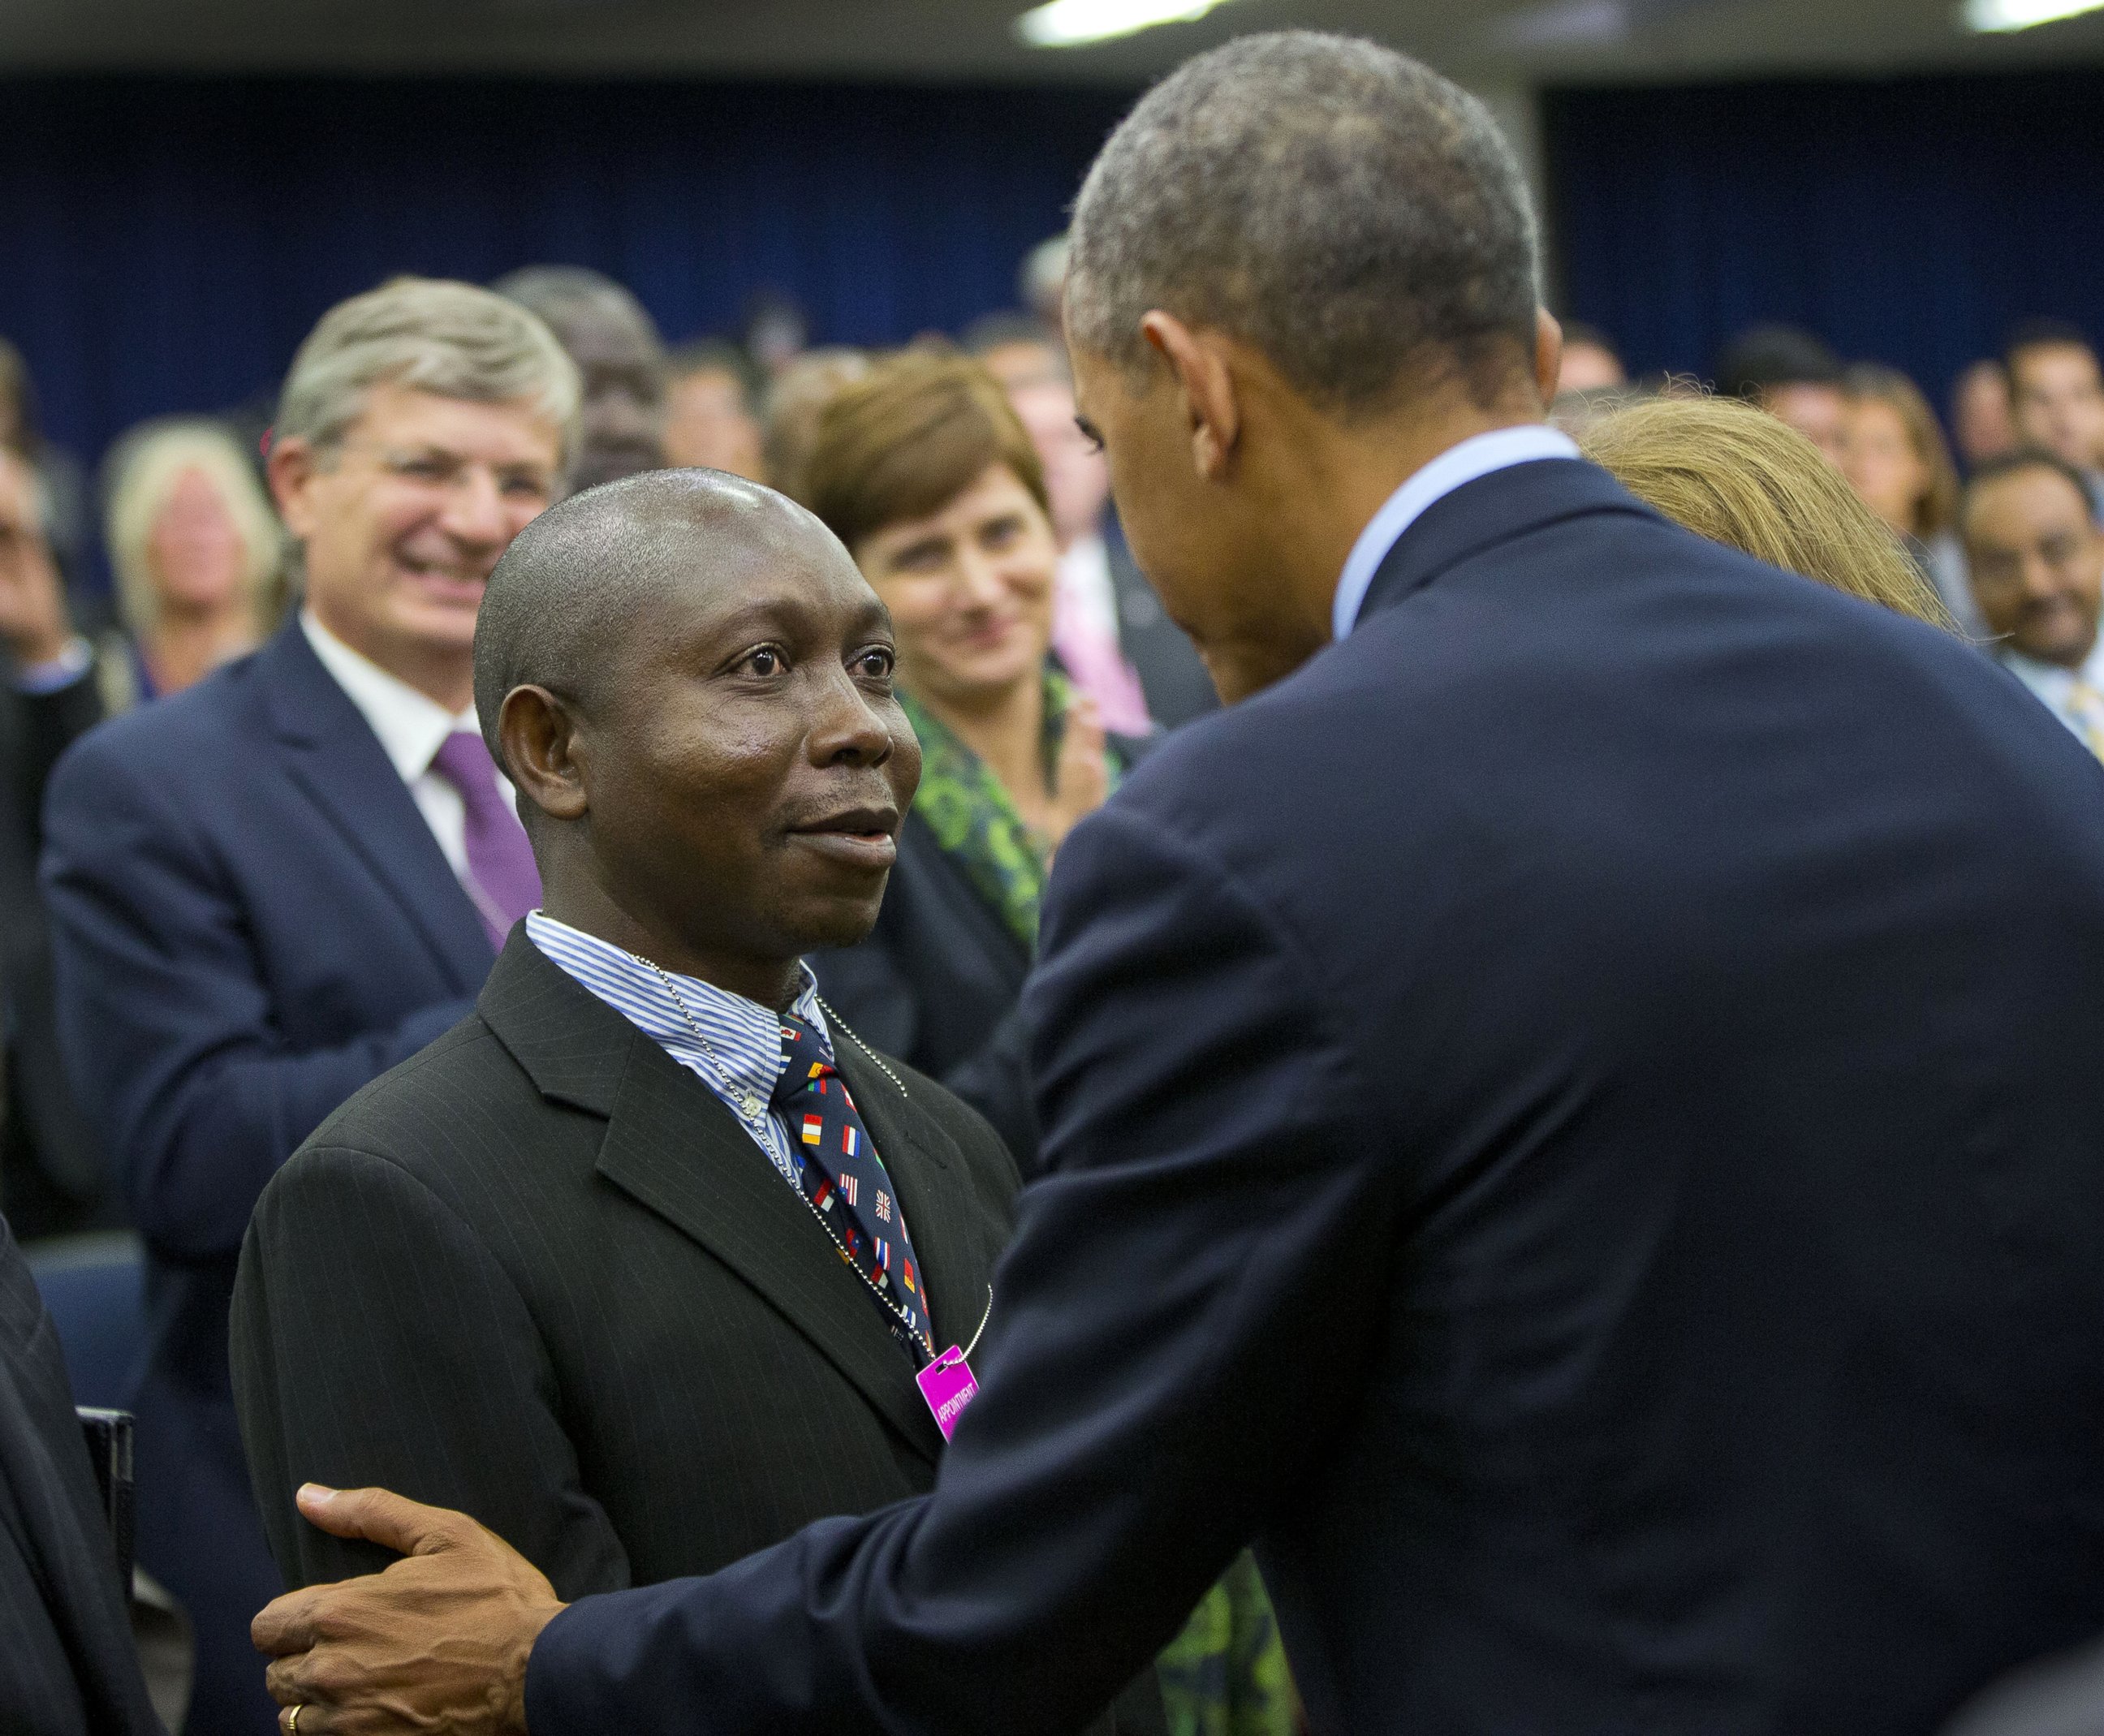 PHOTO: President Barack Obama, right, greets Dr. Melvin Korkor, left, after speaking at the Global Health Security Agenda Summit on Sept. 26, 2014 in Washington, D.C.